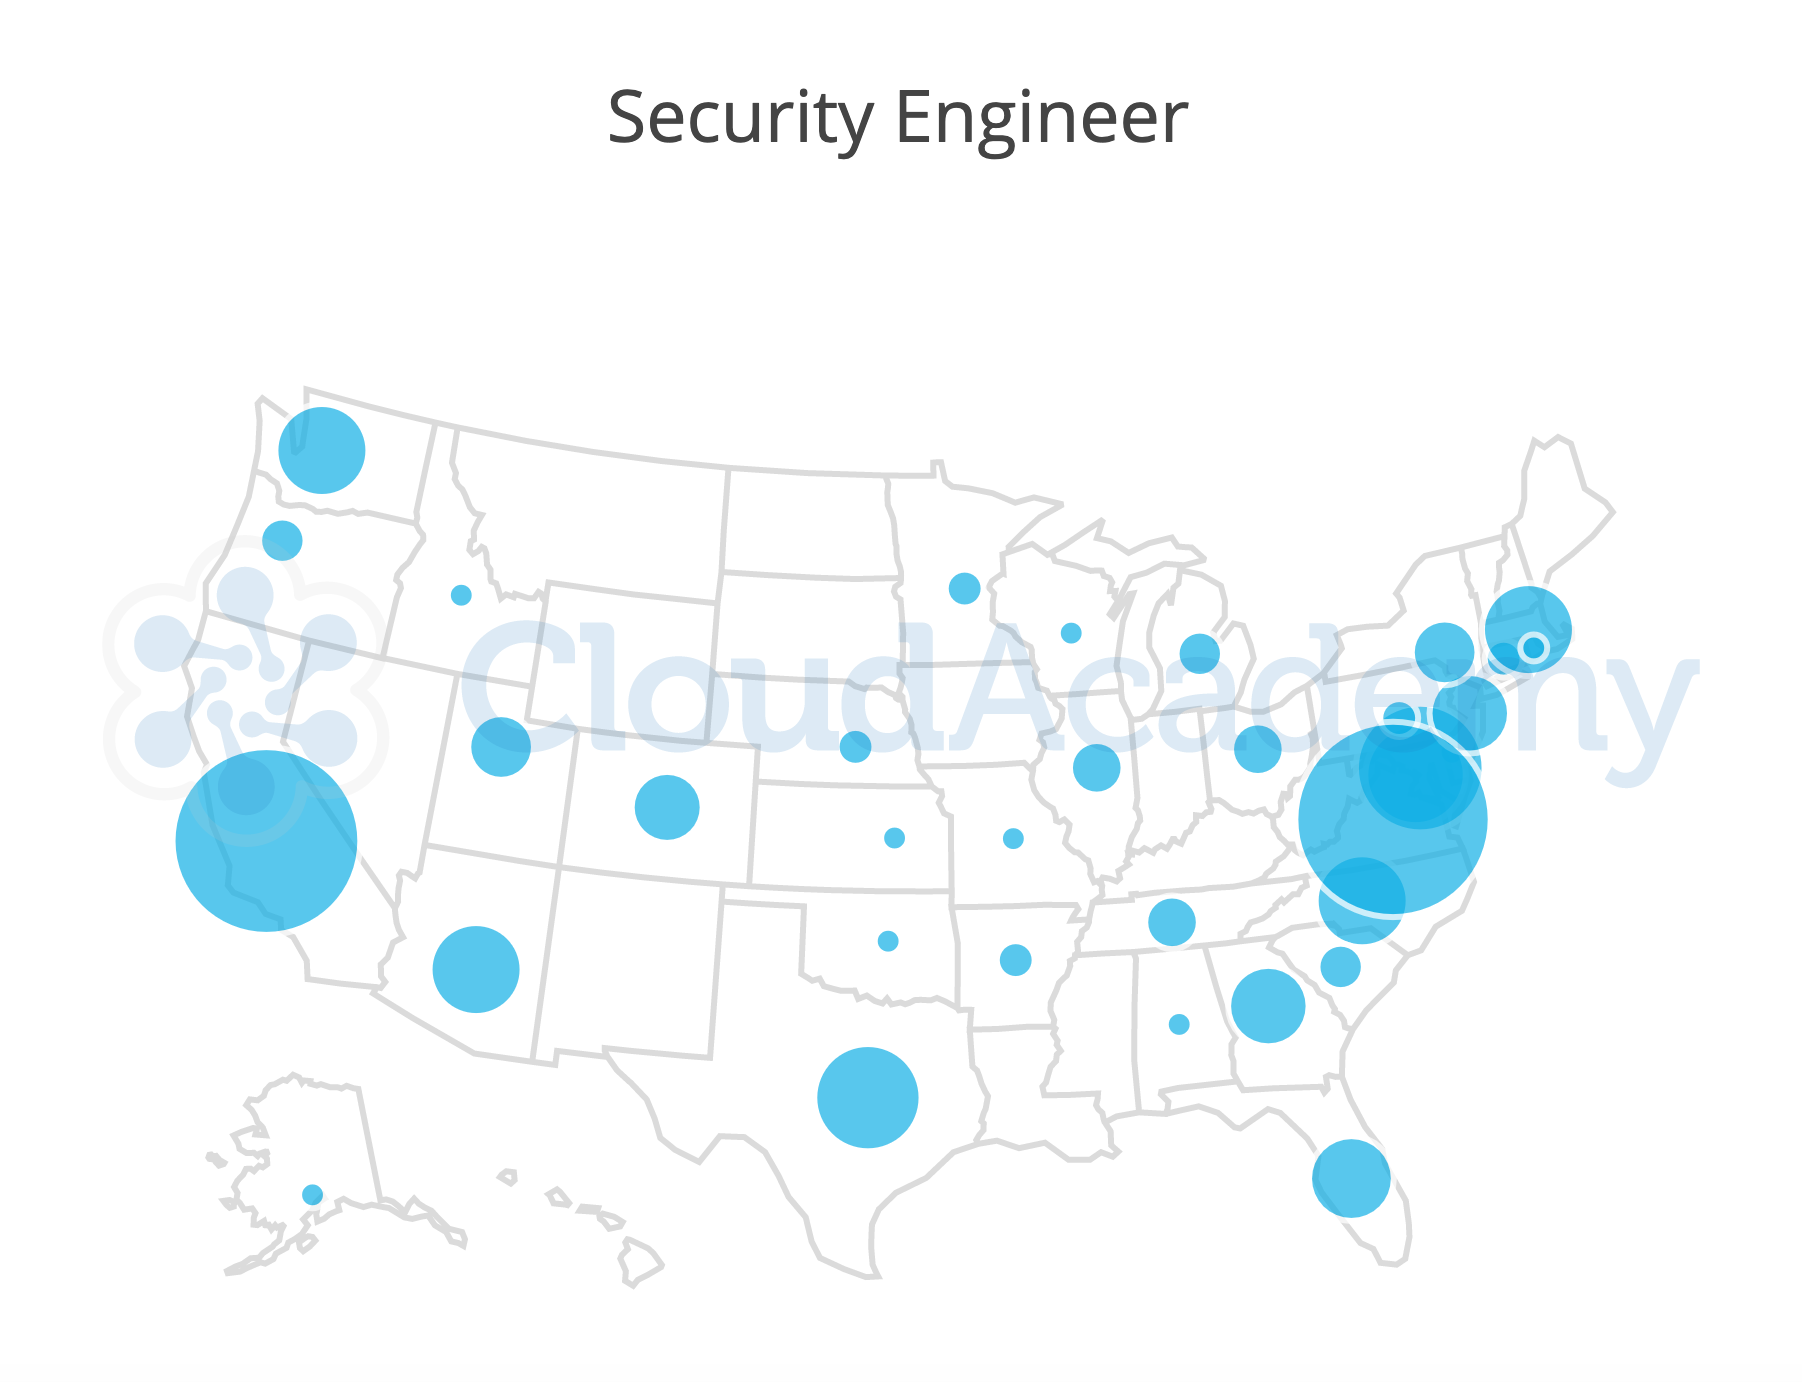 Relative number of security engineer jobs in the U.S., most recent week